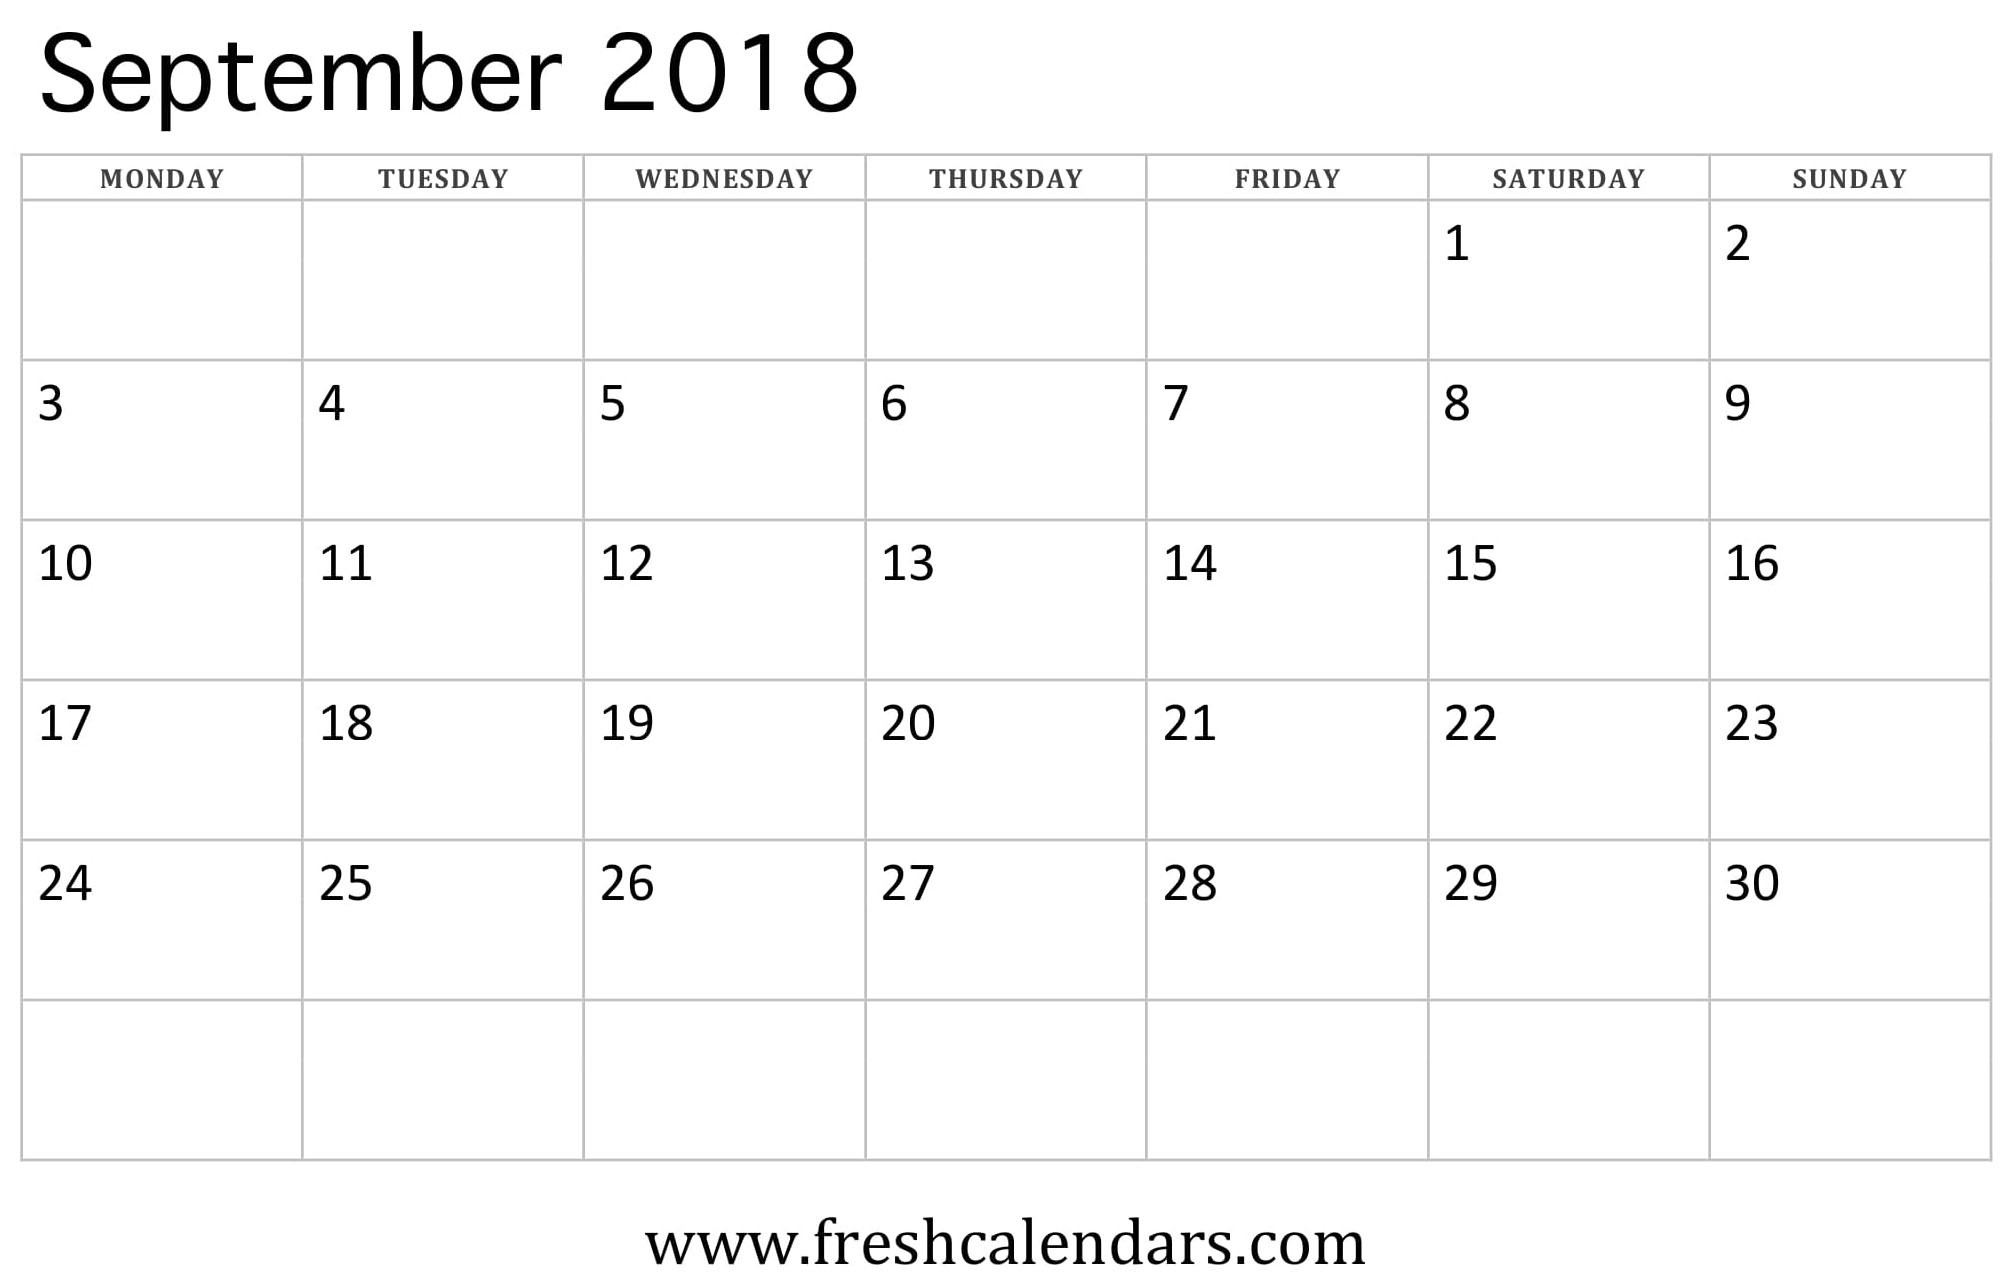 September 2018 Calendar Printable - Fresh Calendars  September Calendar Beginning With Mondays